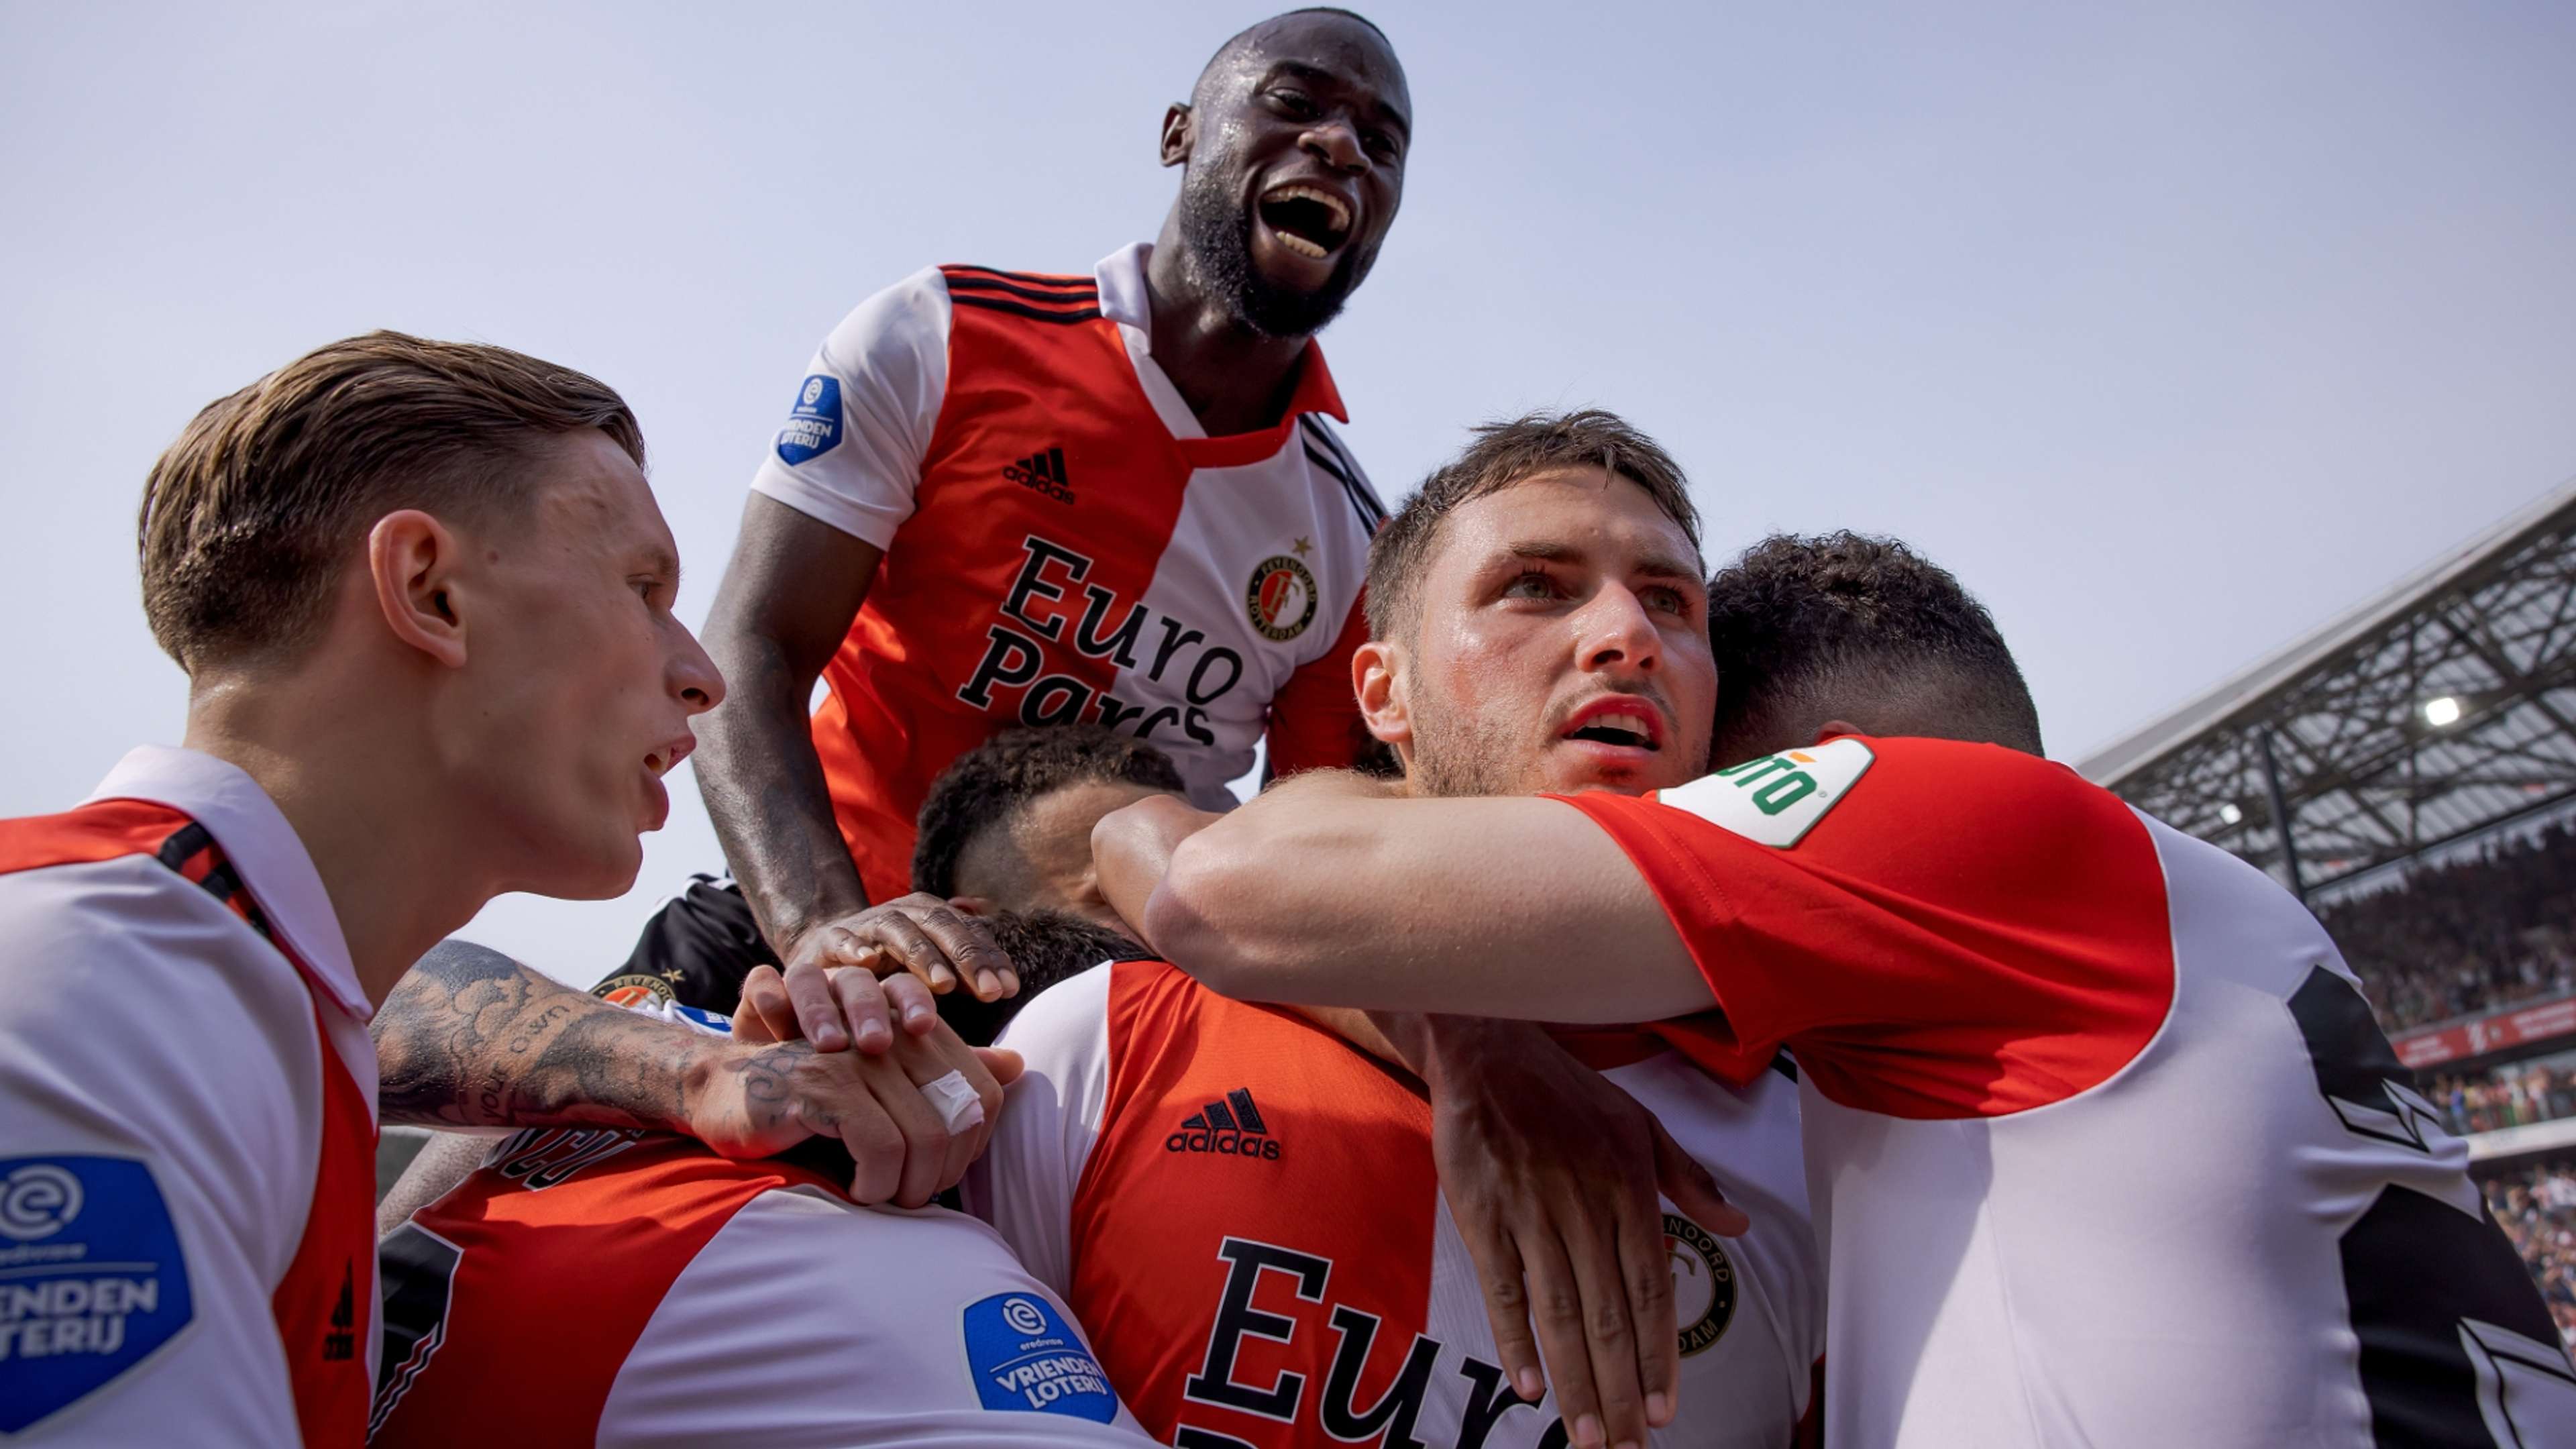 Feyenoord celebrates the title from Eredivisie